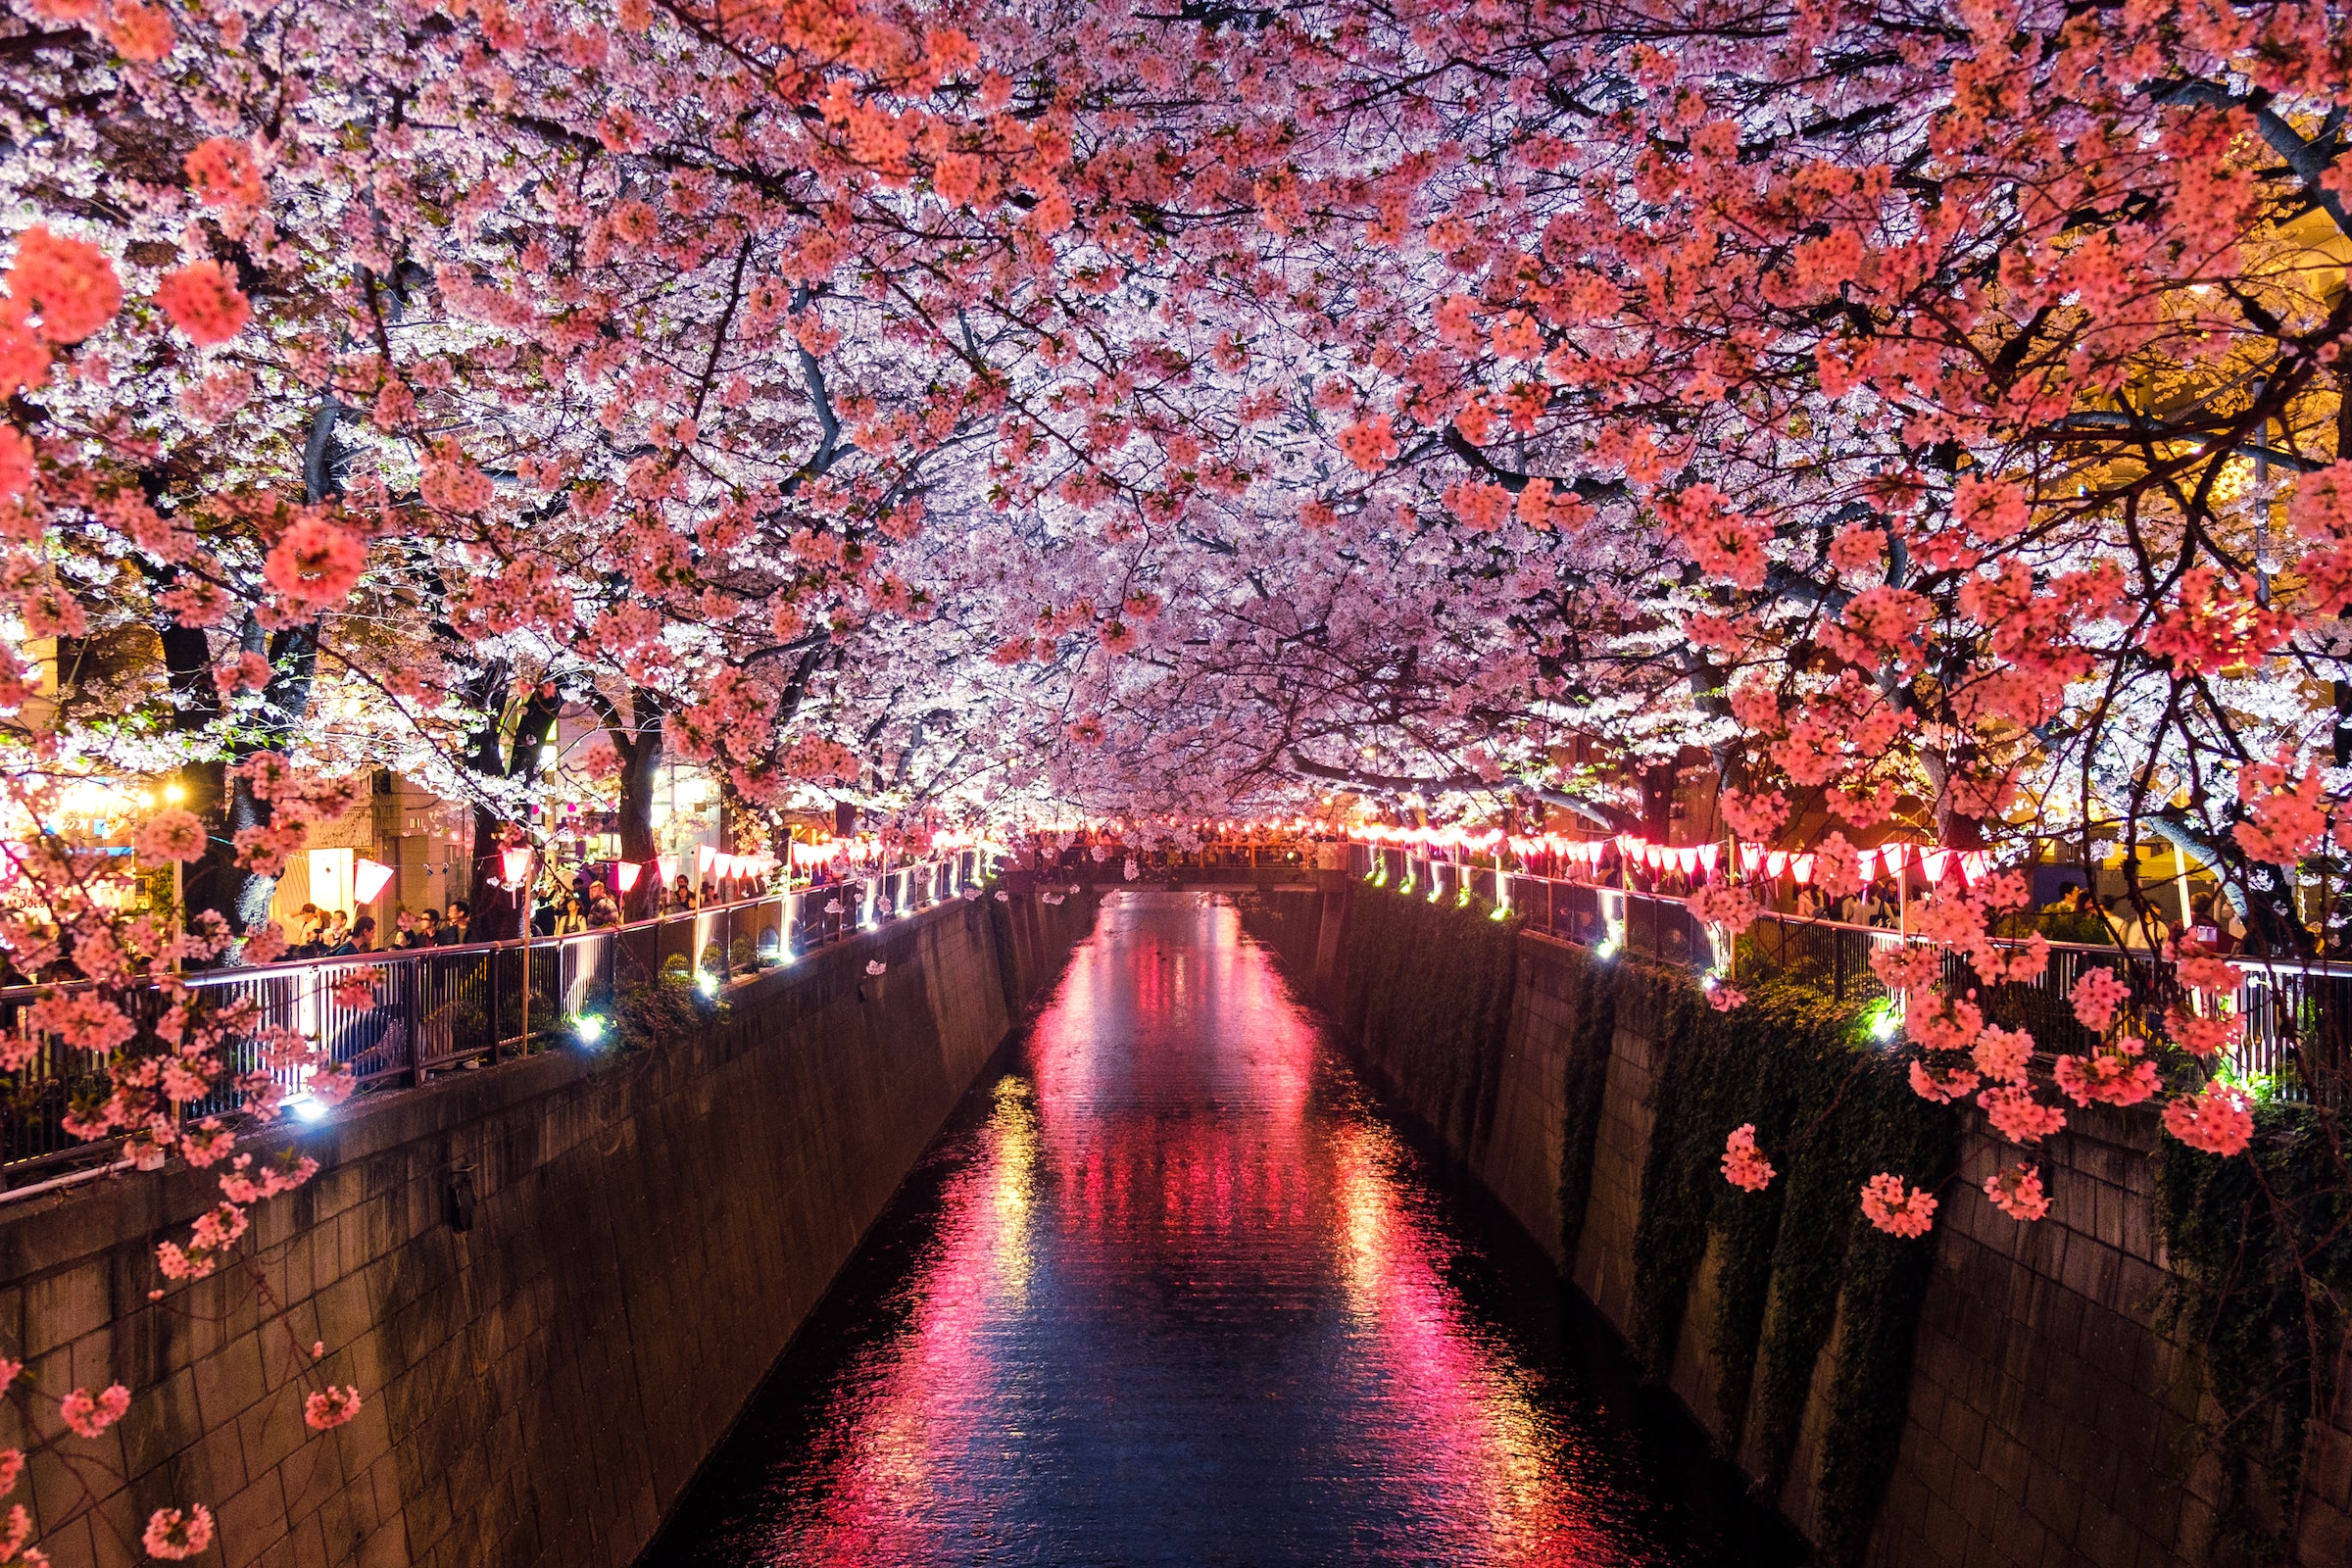 Cherry blossoms hanging over waterway - Contact Cornelia Gilbert - Image by Sora Sagano